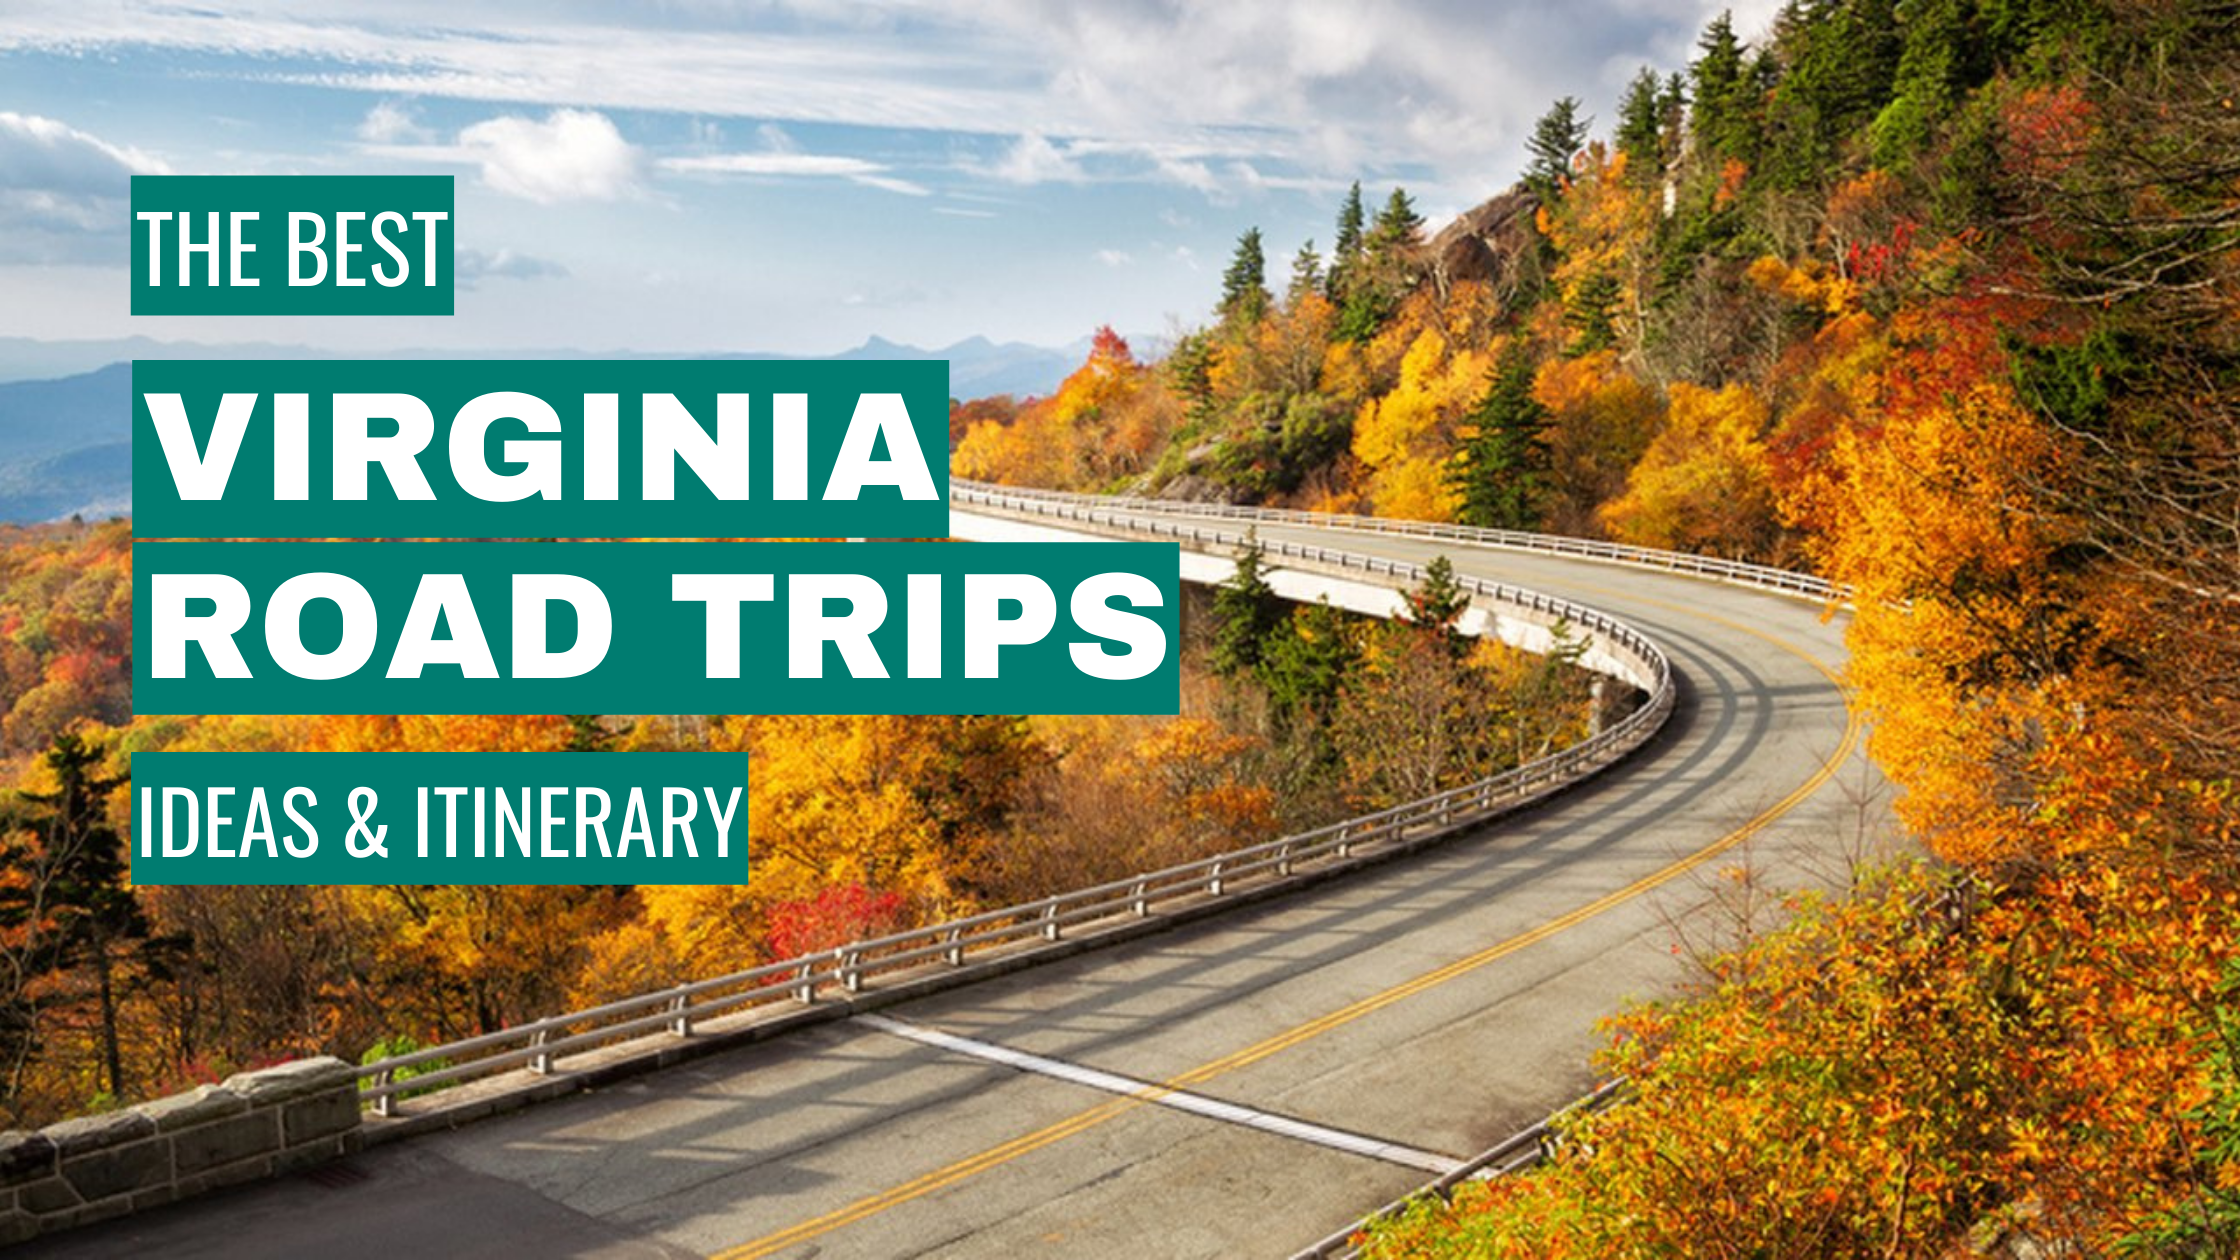 Virginia Road Trip Ideas: 11 Best Road Trips + Itinerary